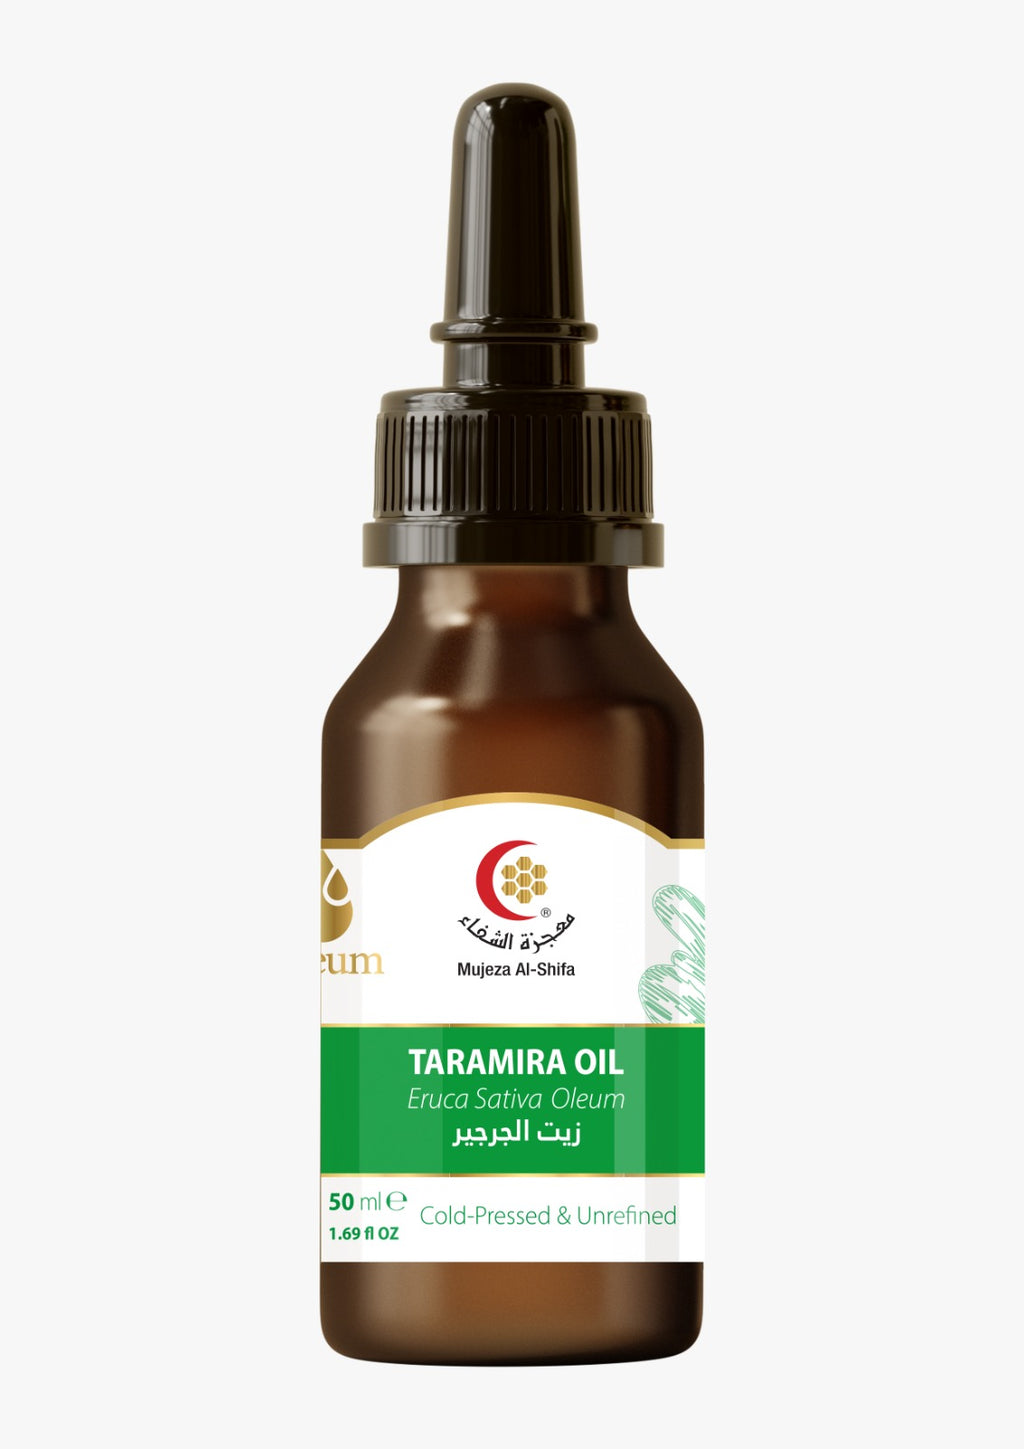 Taramira (Eruca Sativa) Essential Oil 100% Pure & Natural - Undiluted Uncut Oil - Best for Aromatherapy - Therapeutic Grade - 15ML